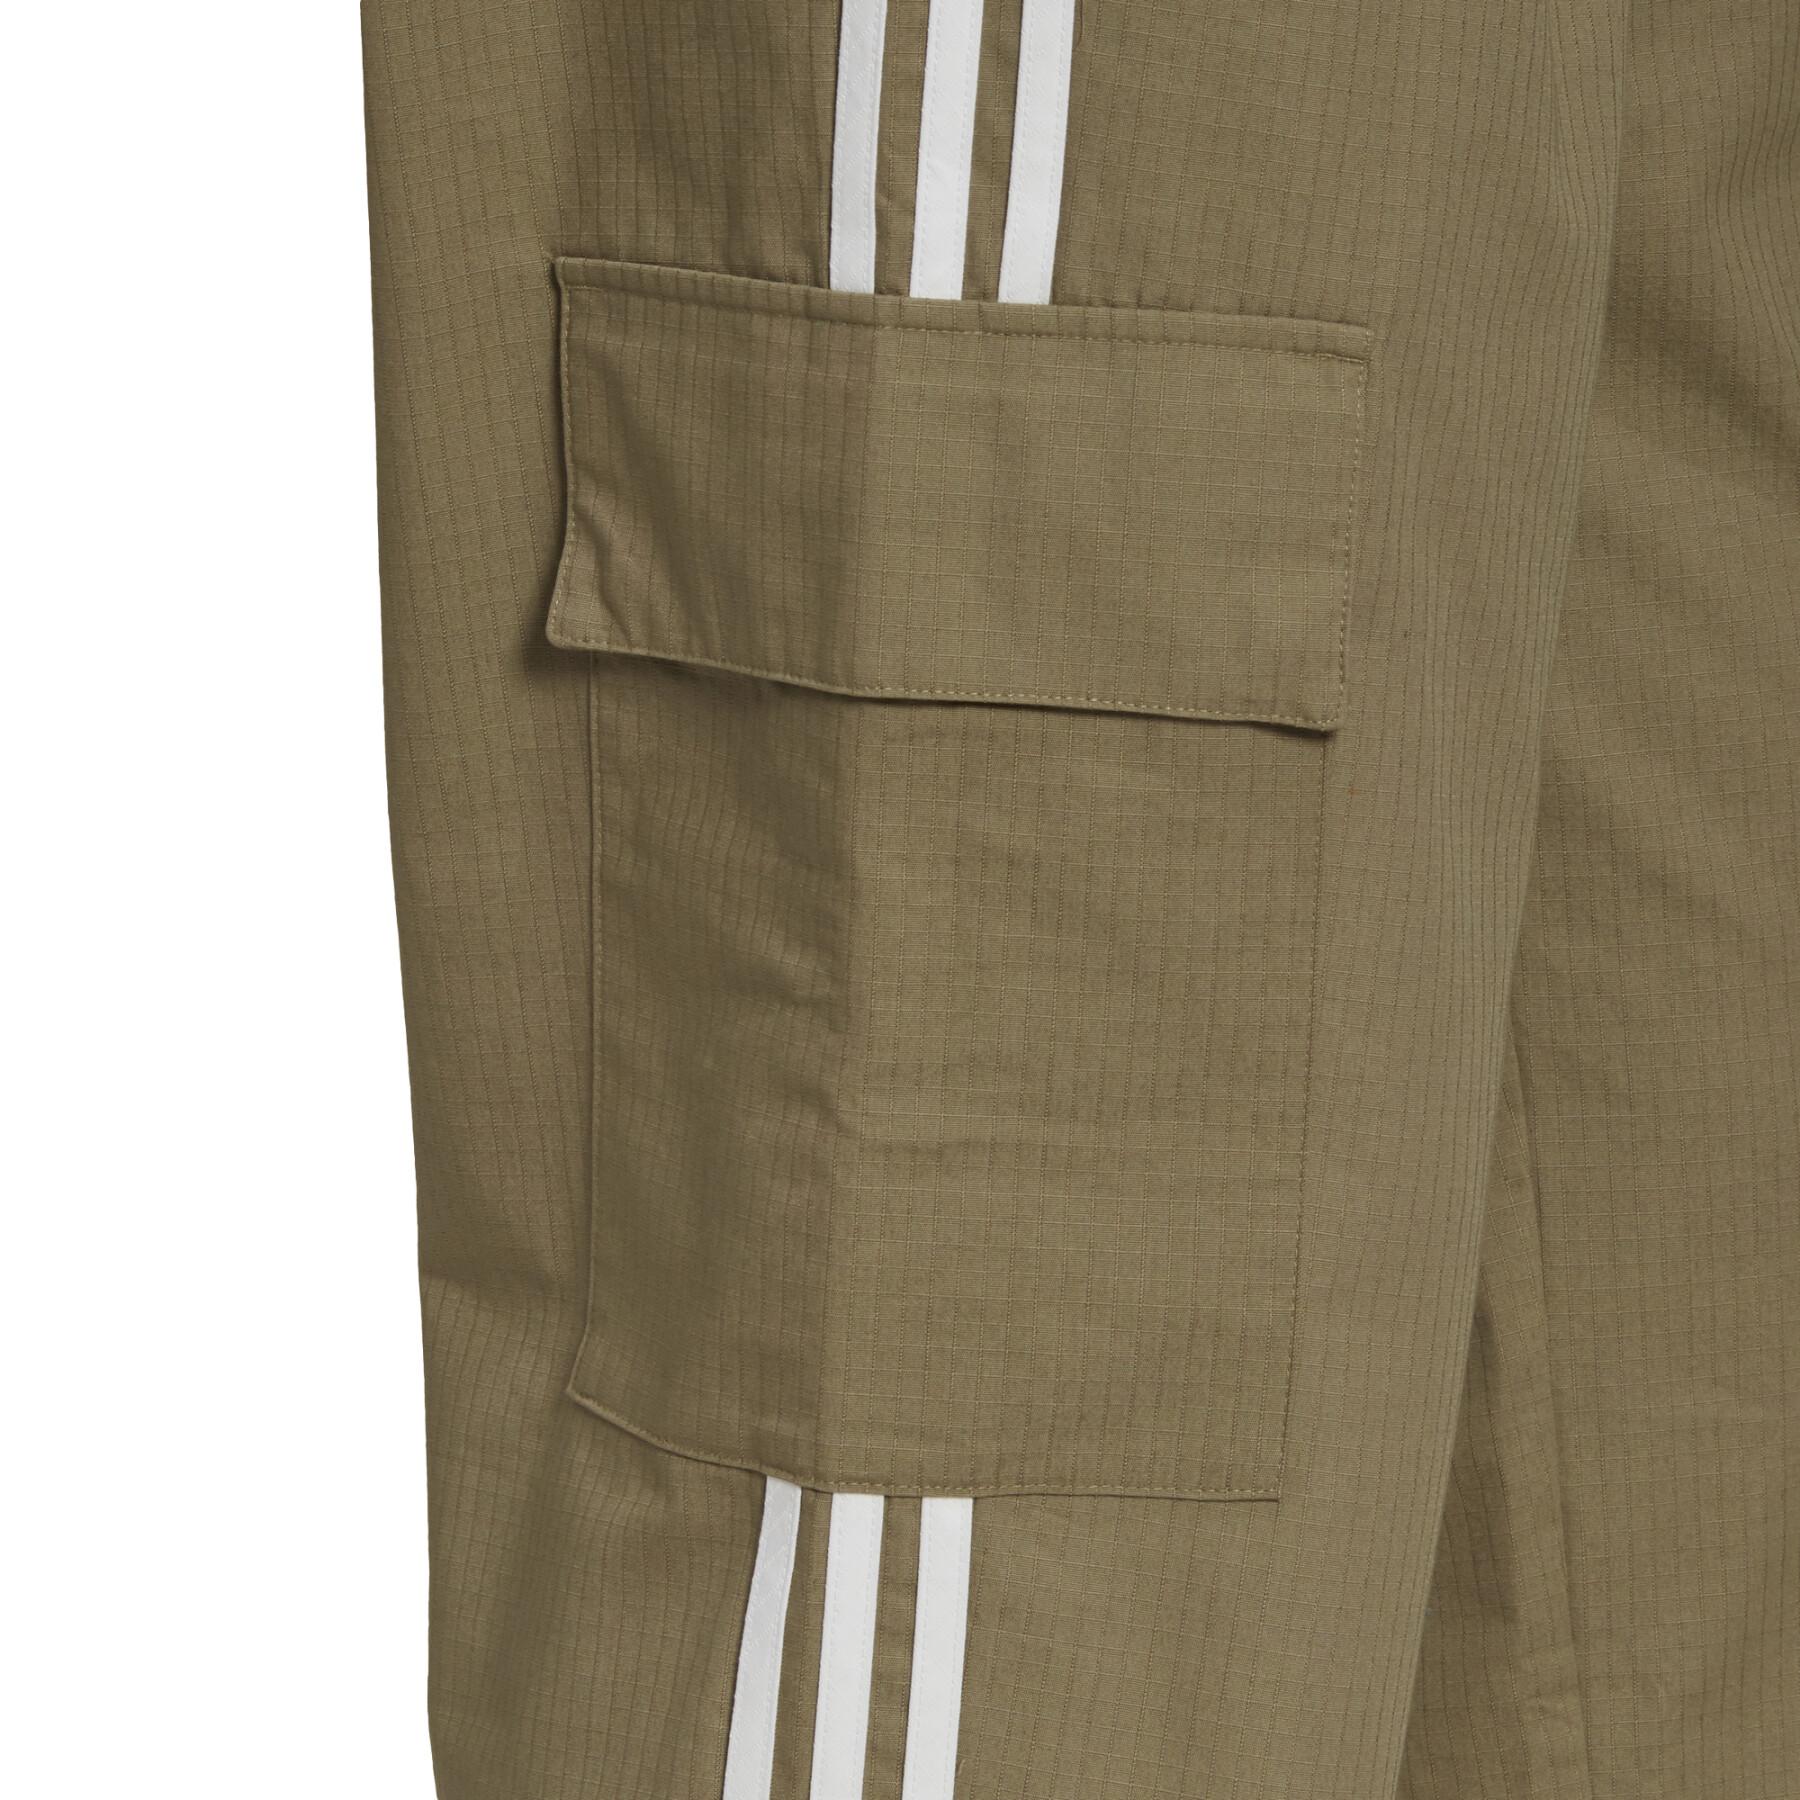 Cargo sweatpants adidas Originals Adicolor 3-Stripes